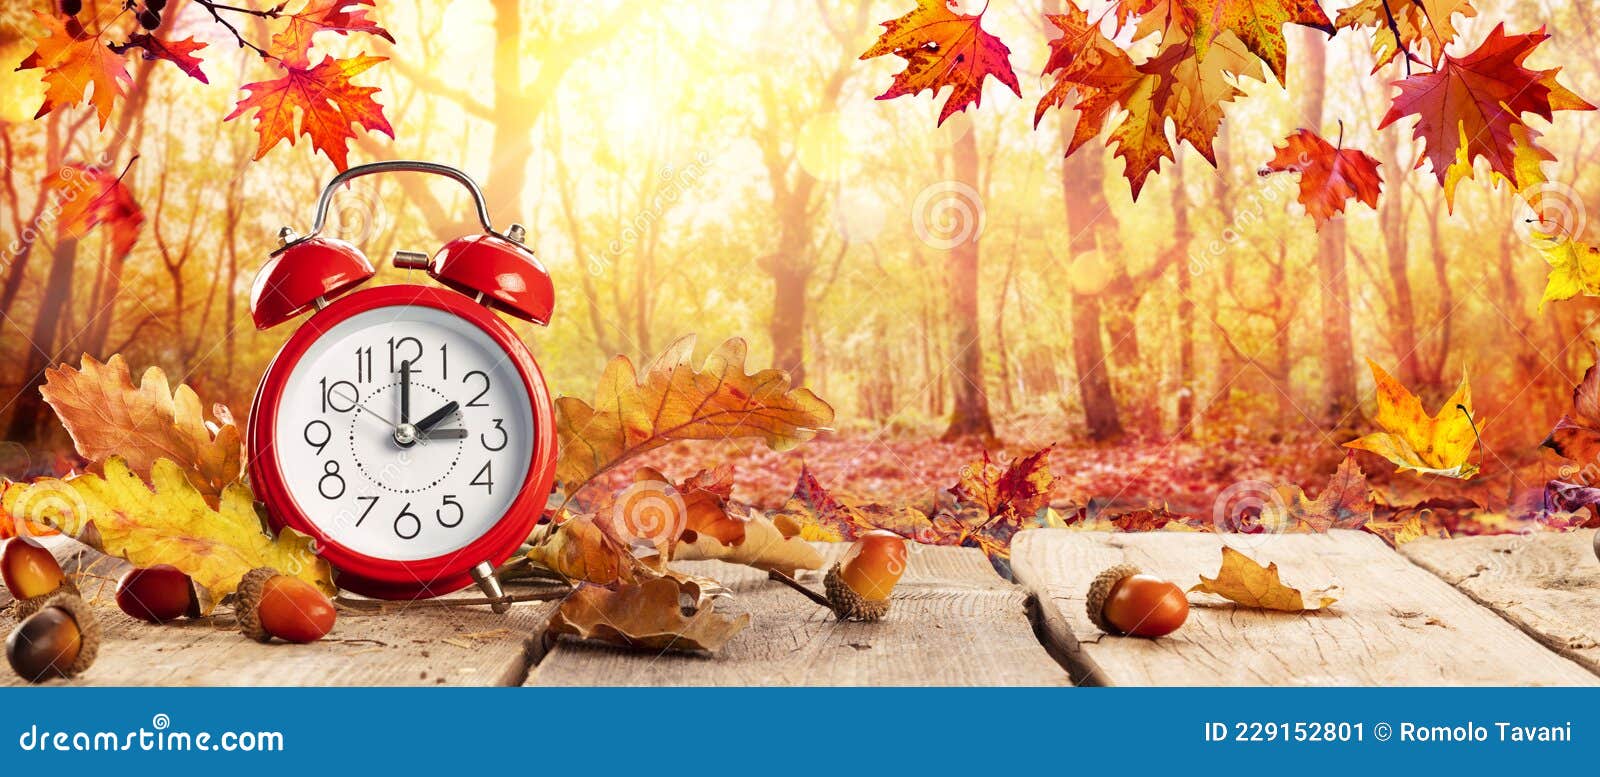 fall back time - daylight savings end